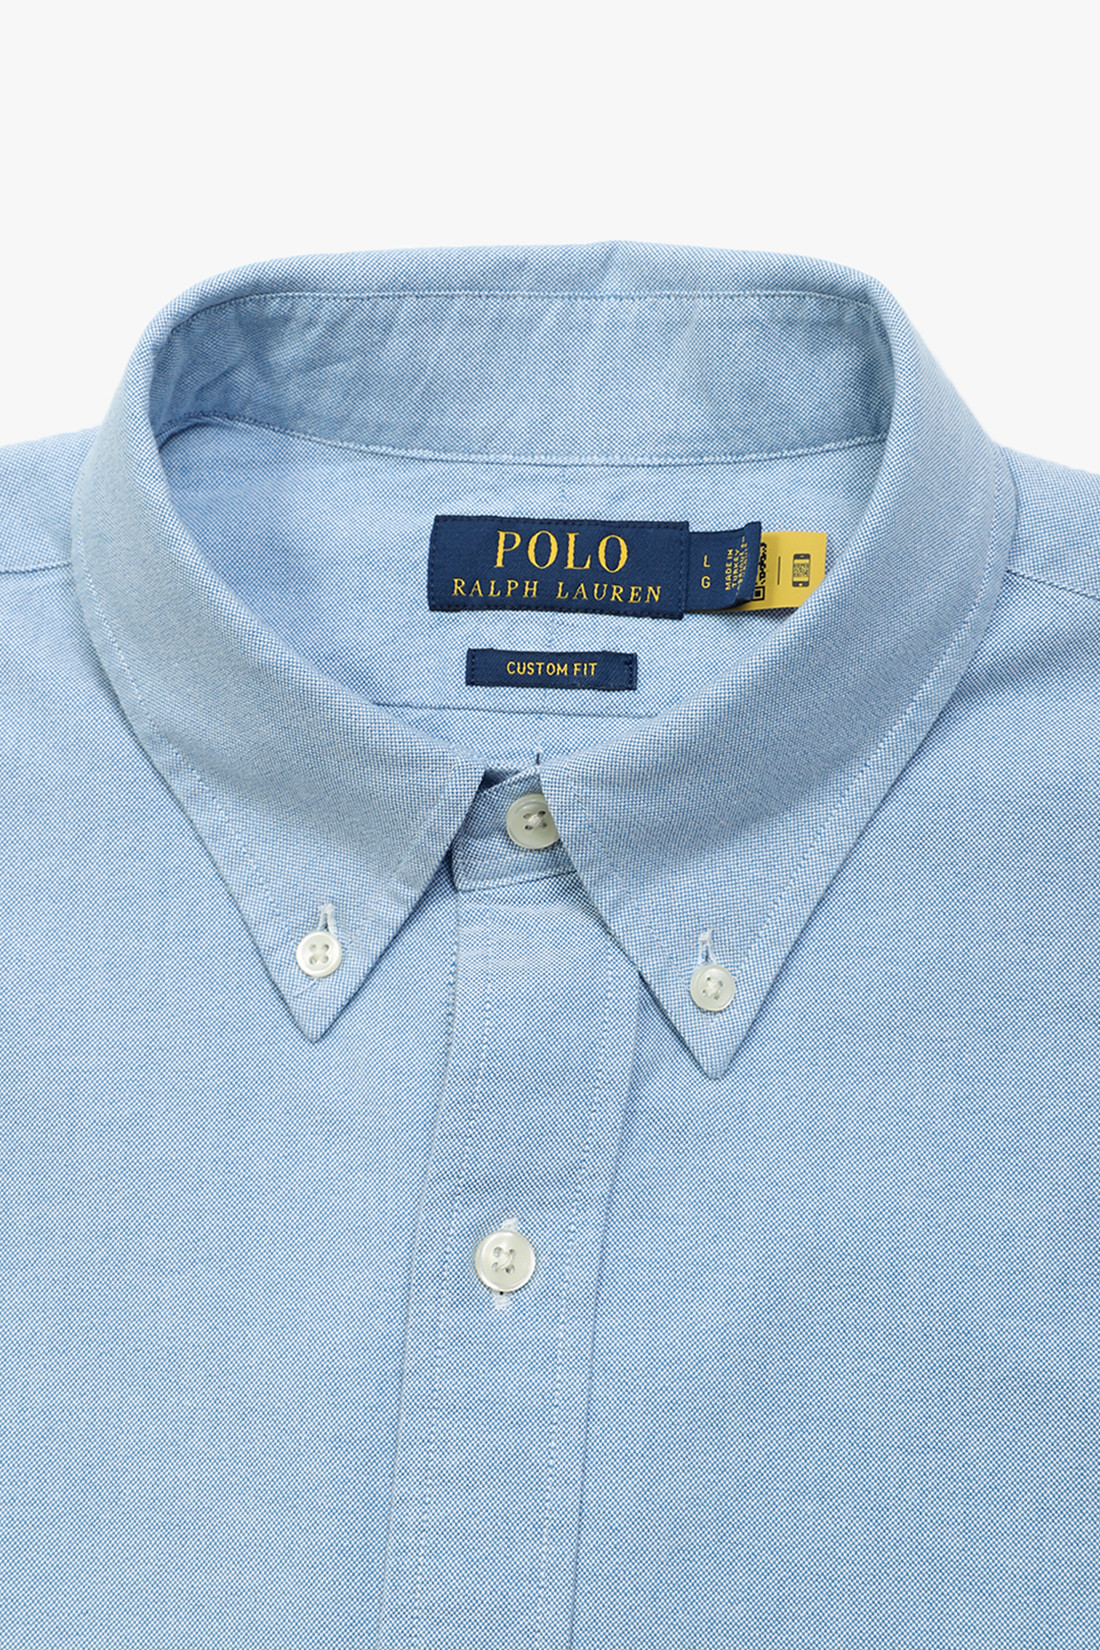 Polo ralph lauren Custom fit oxford shirt Blue - GRADUATE STORE | EN